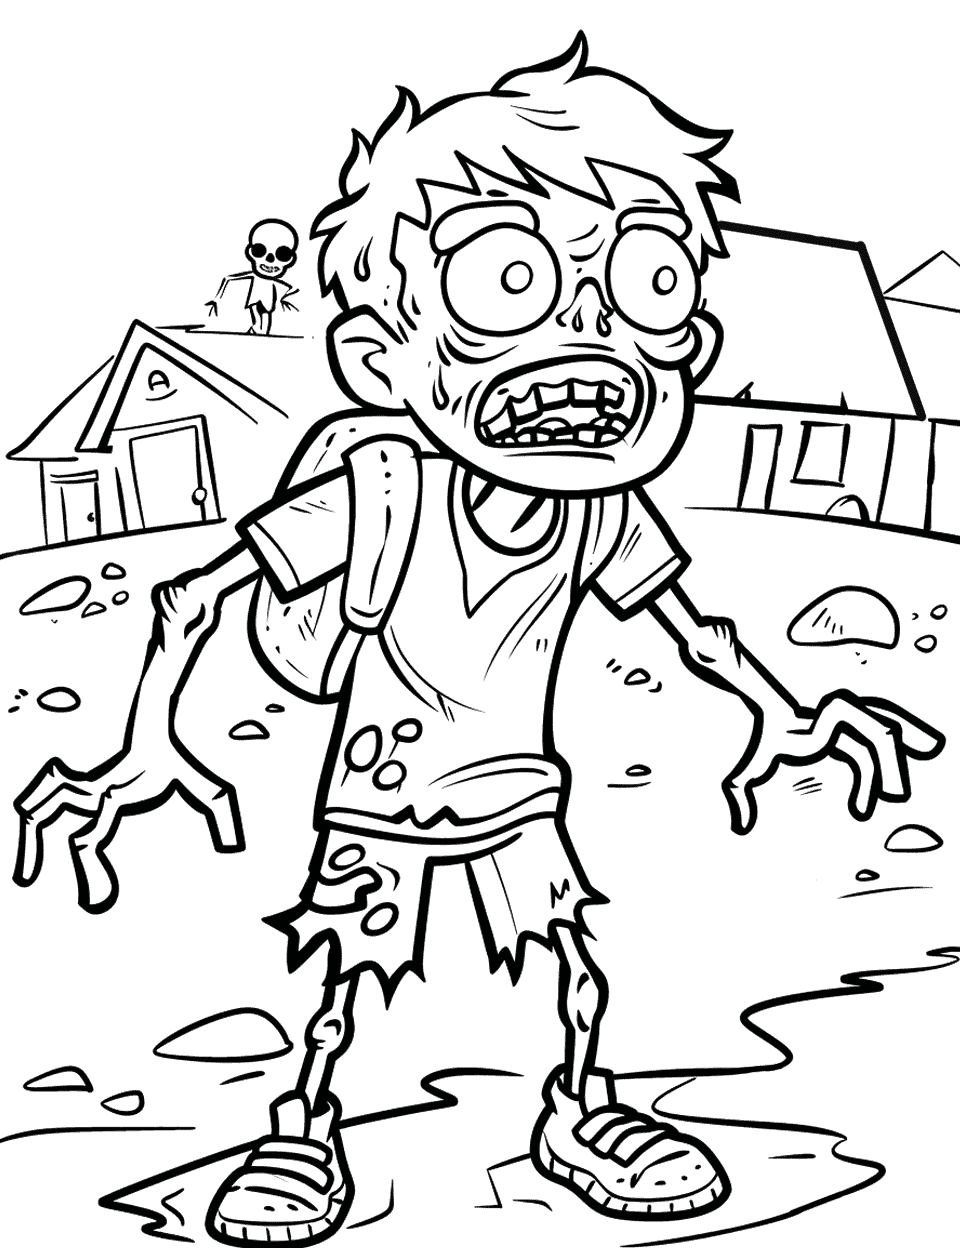 Zack the Zombie Explorer Coloring Page - Zack the zombie exploring a deserted zombie-infested town.